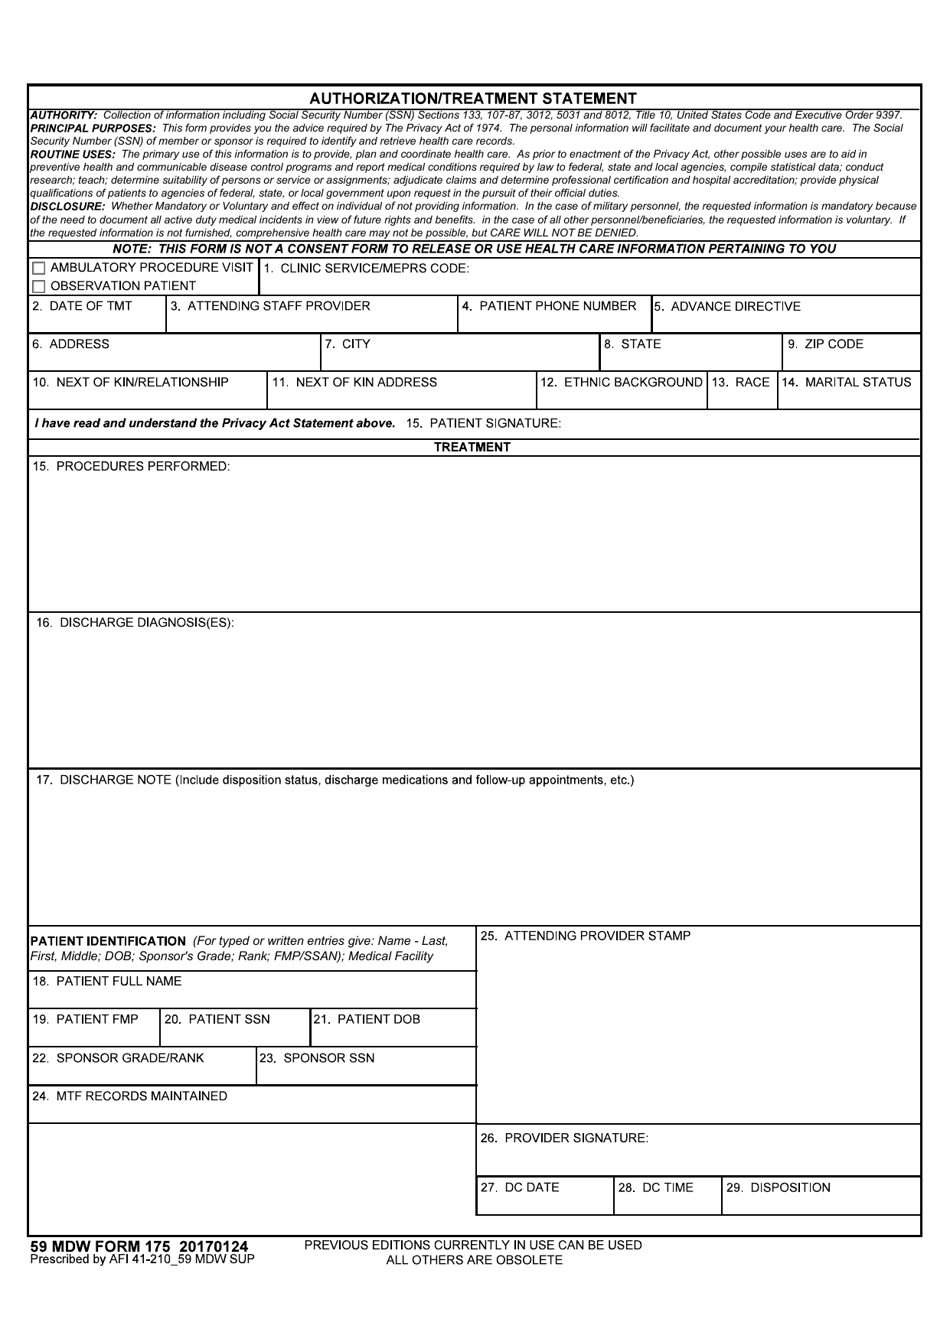 59 MDW Form 175 Authorization / Treatment Statement, Page 1